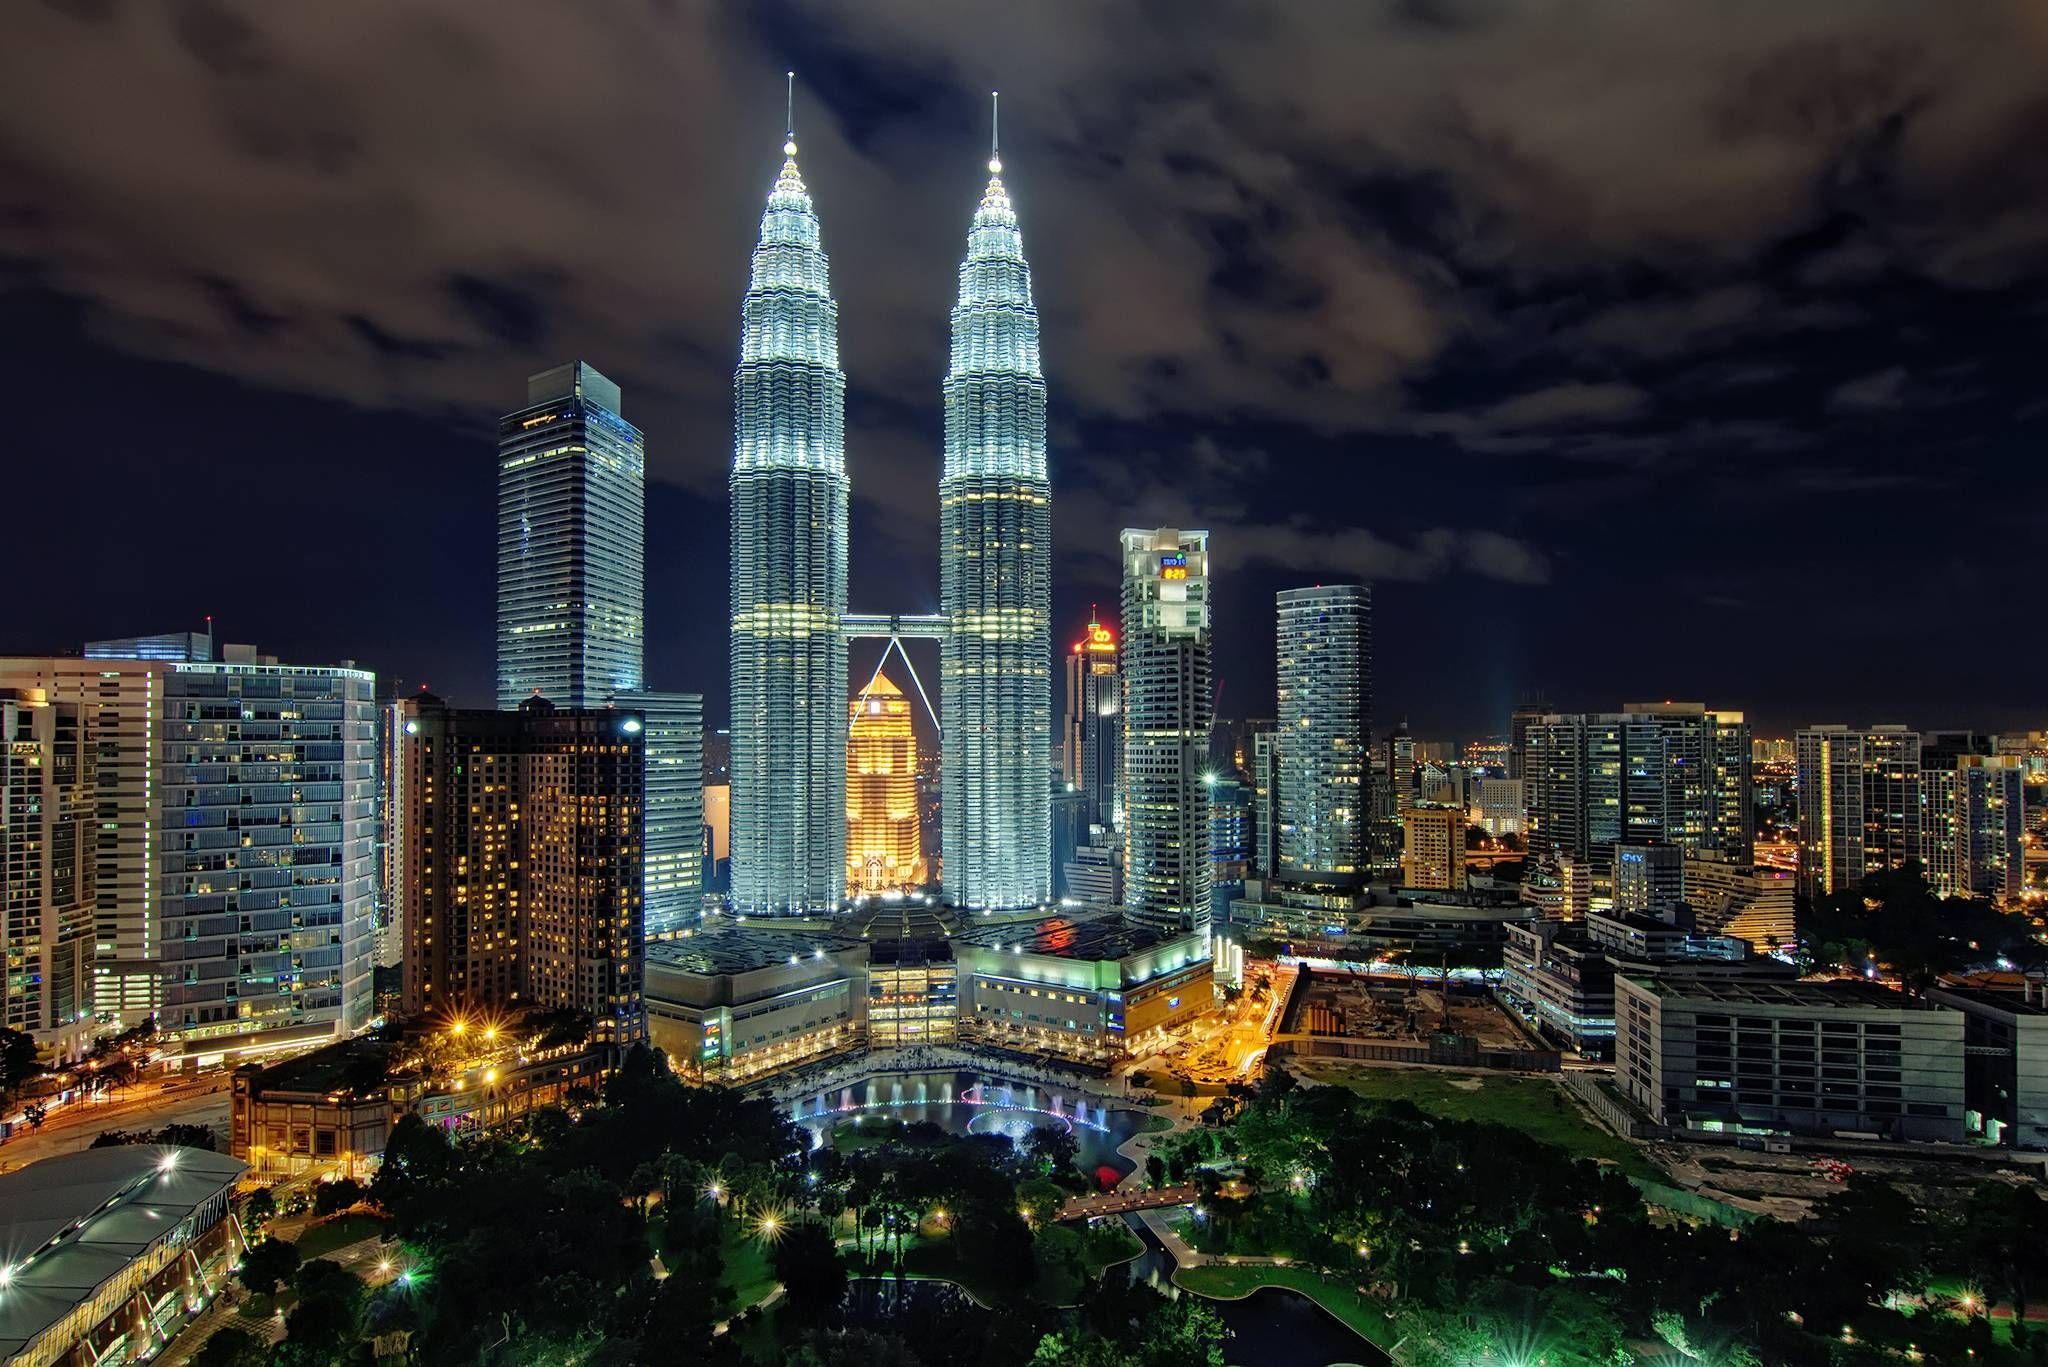 2048x1367 Photo of the Petronas Towers at Night (Kuala Lumpur, Malaysia) | Petronas towers, Kuala lumpur, Malaysia